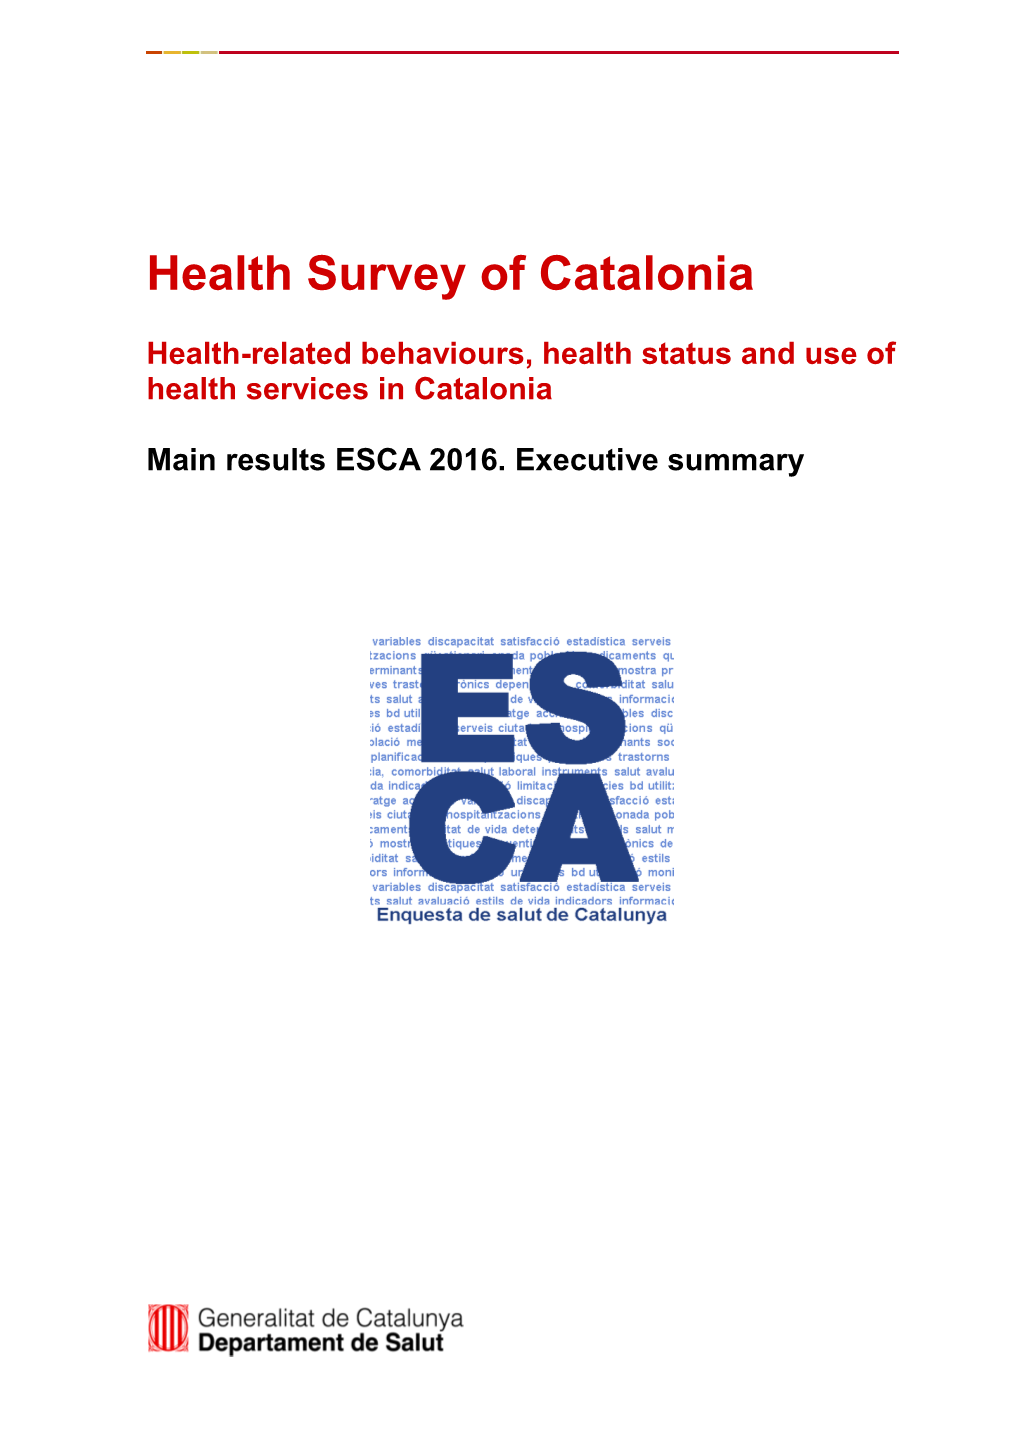 Main Results ESCA 2016. Executive Summary